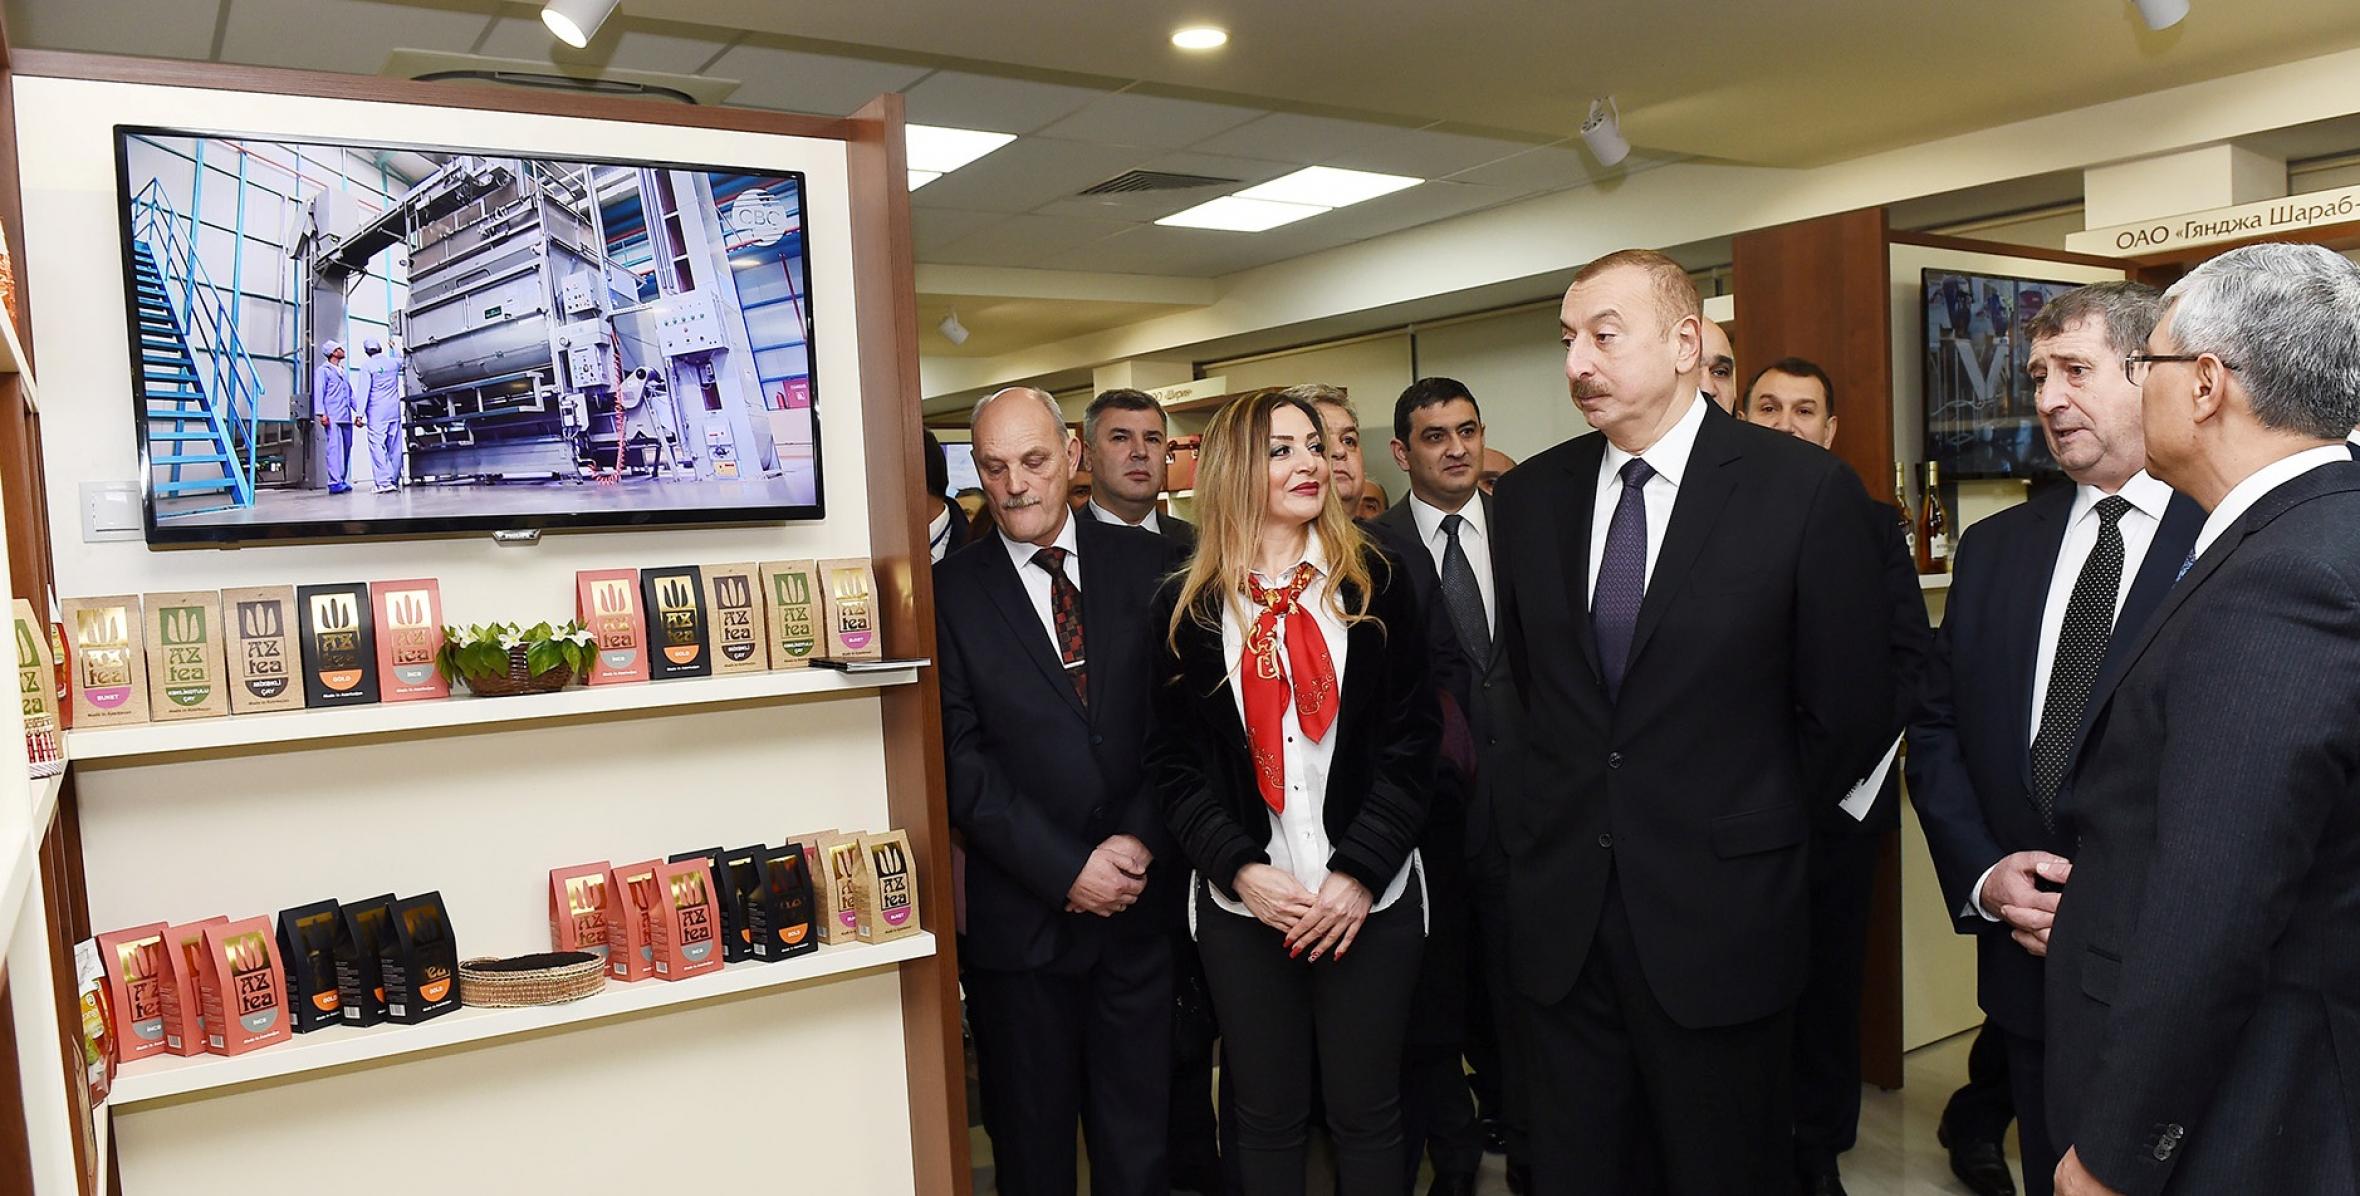 Ilham Aliyev familiarized himself with Azerbaijan’s trading house in Minsk